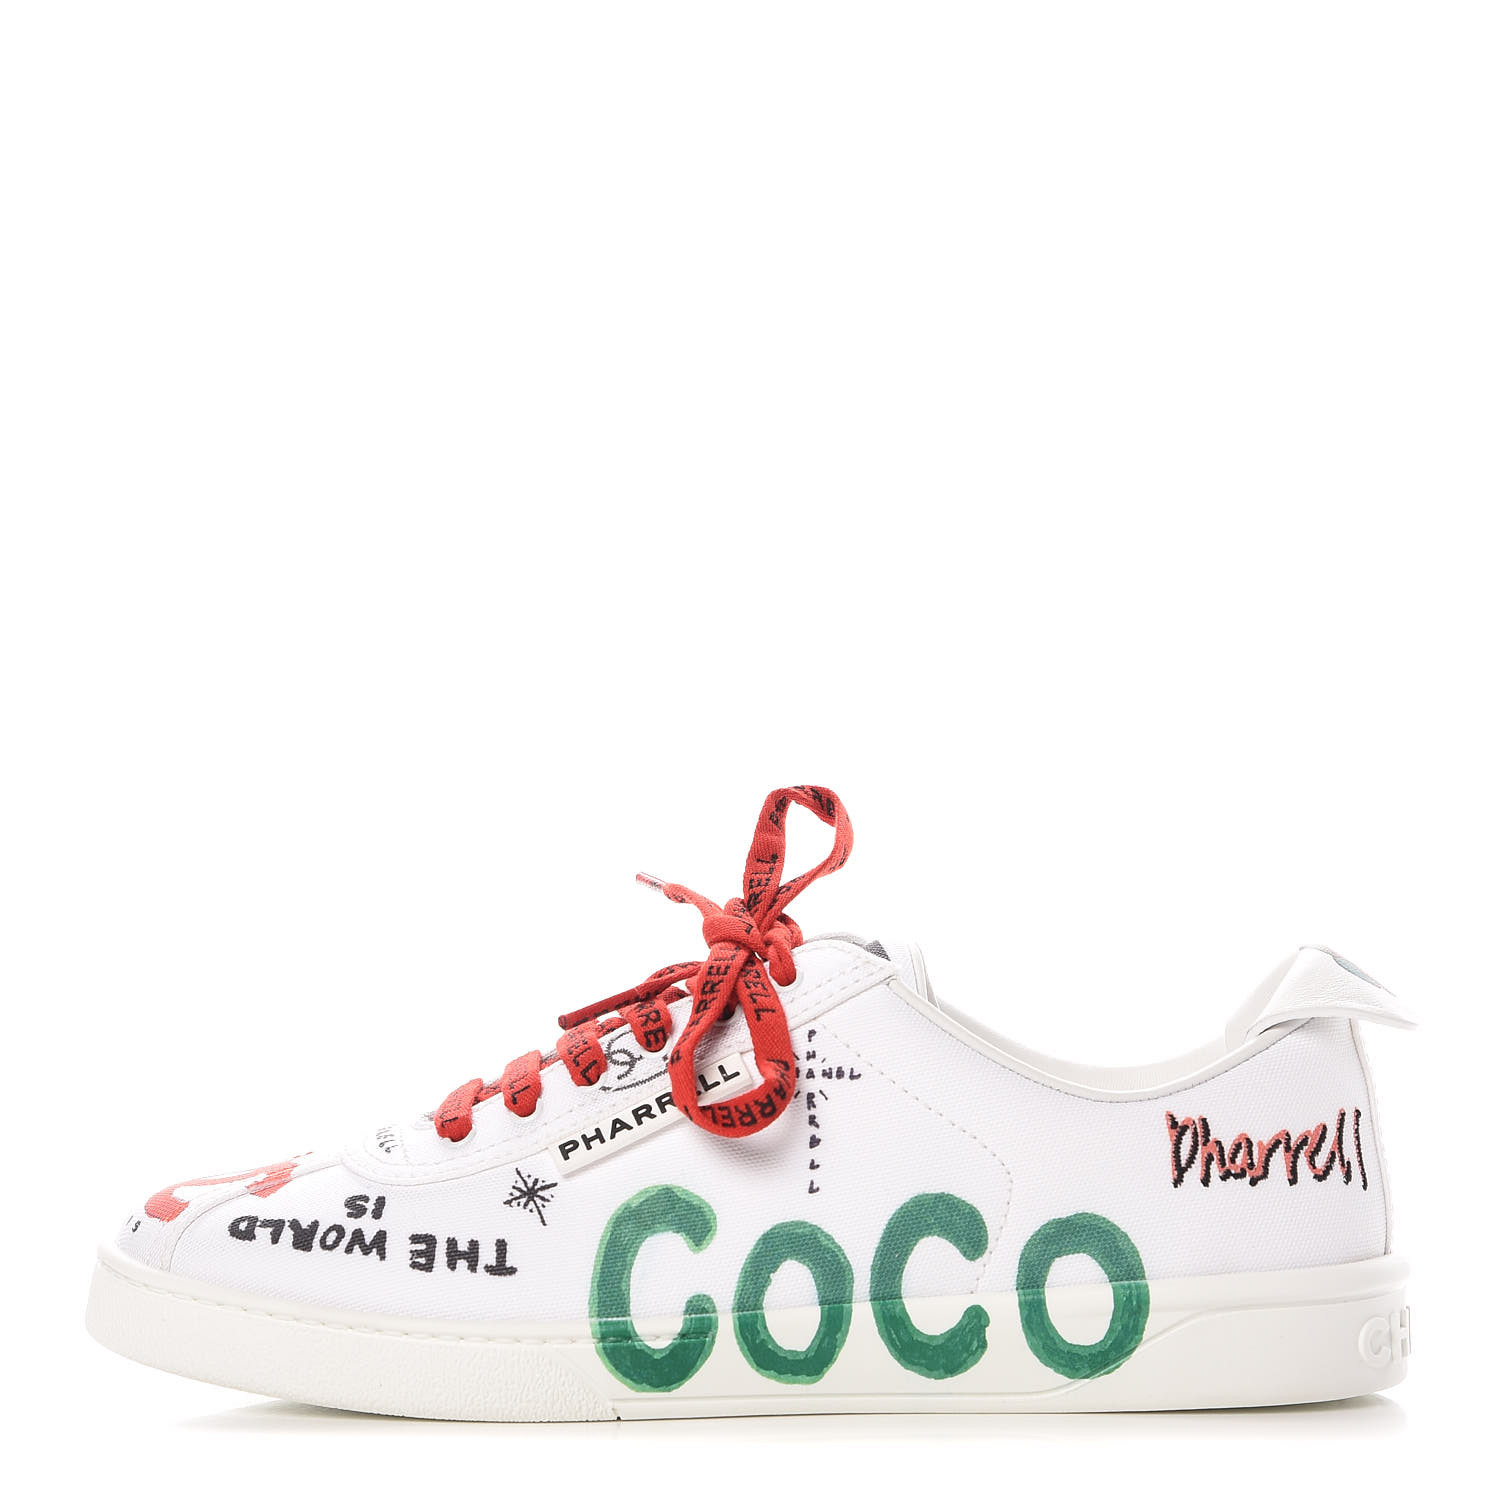 coco pharrell shoes